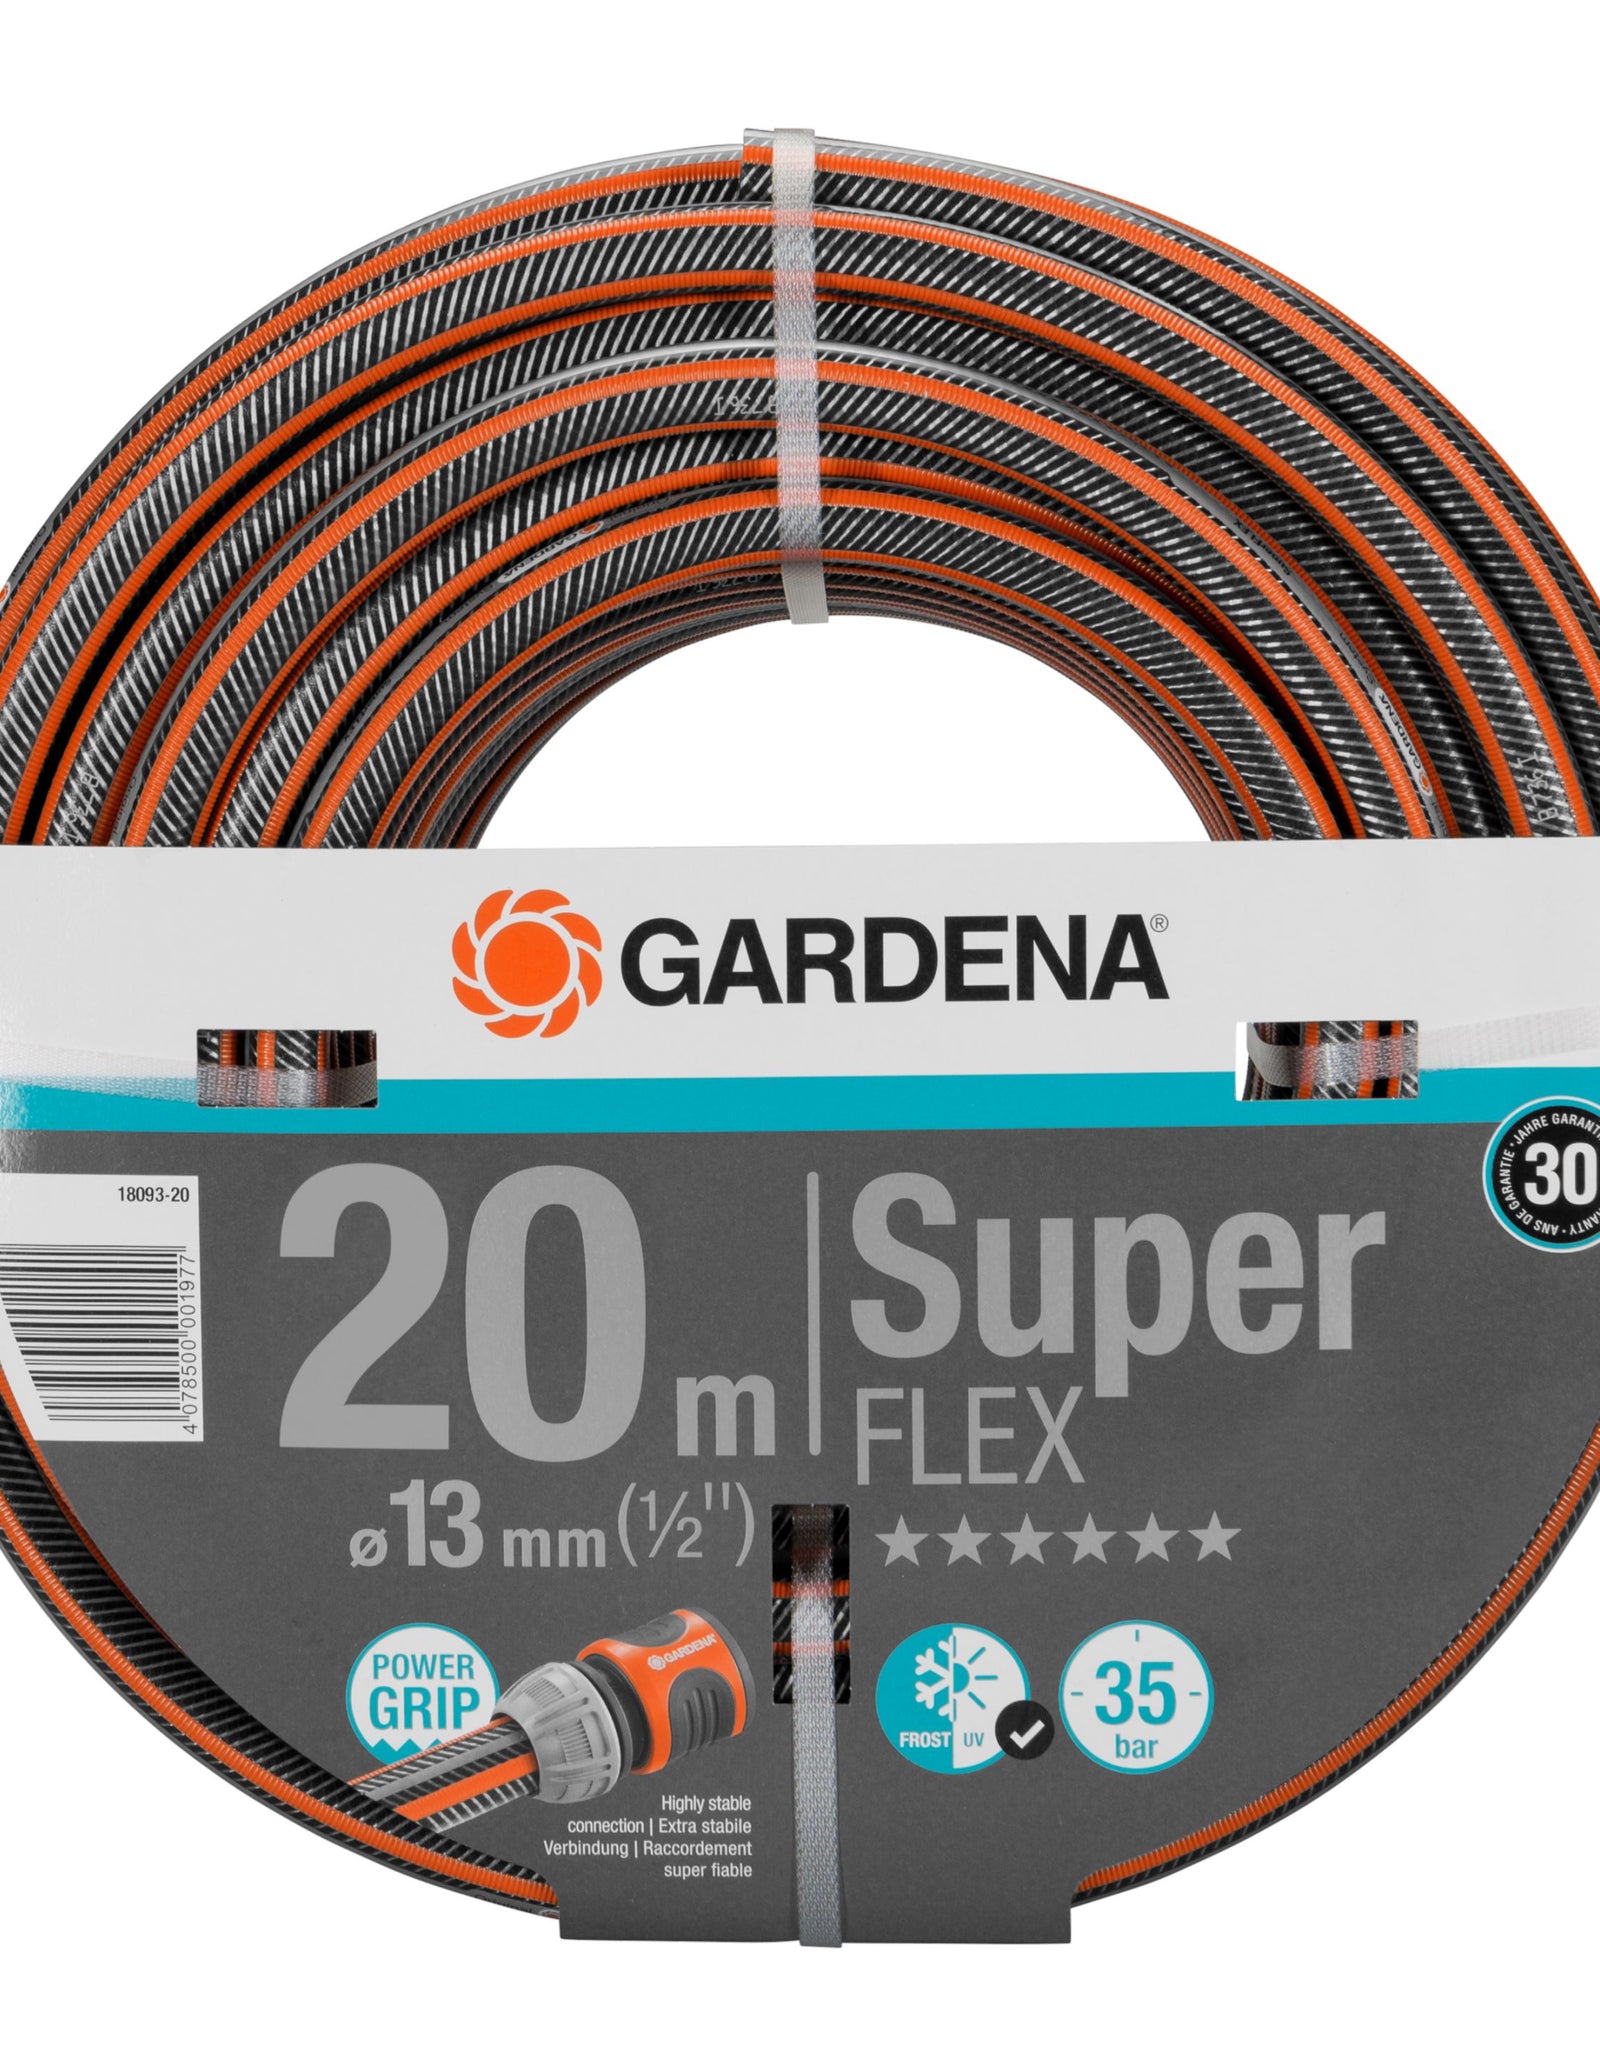 GARDENA Premium SuperFLEX Hose 13mm (1/2") x 20m